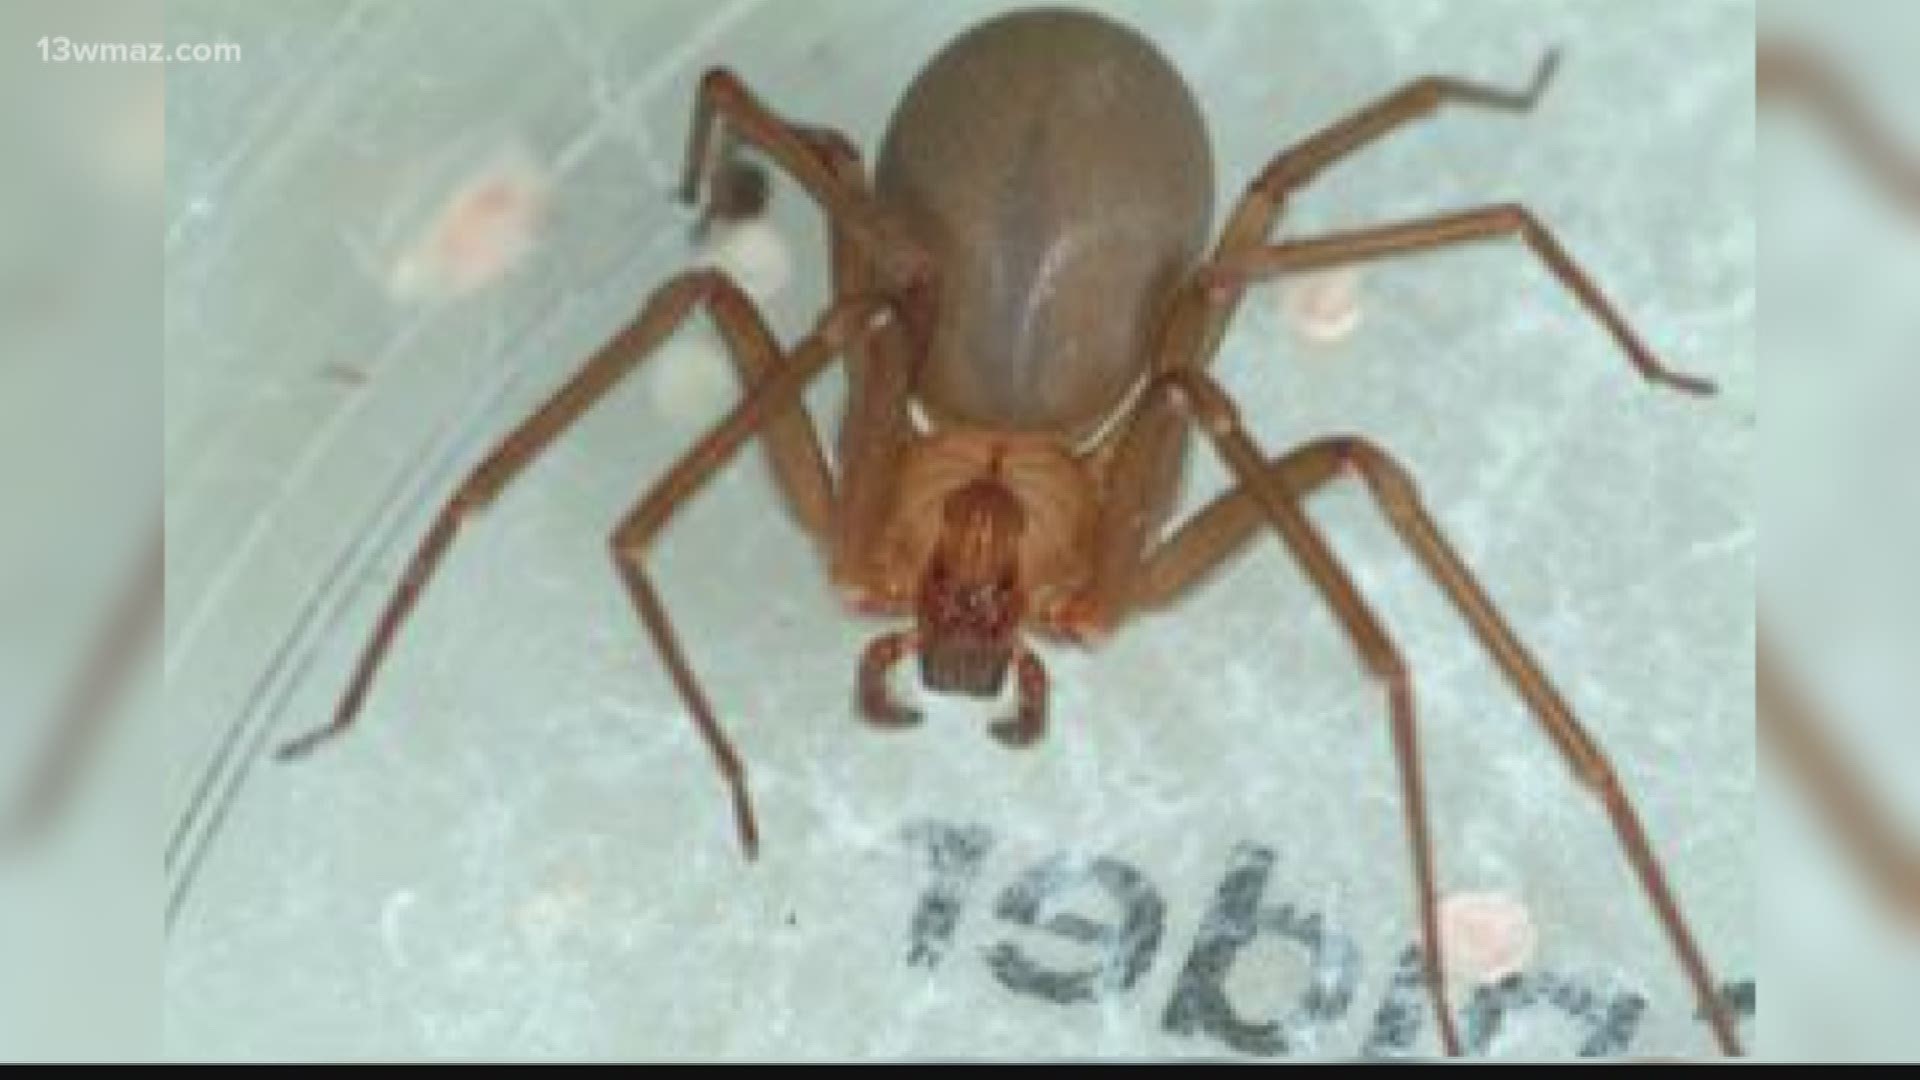 Brown Recluse Spider Bite - Very Dangerous